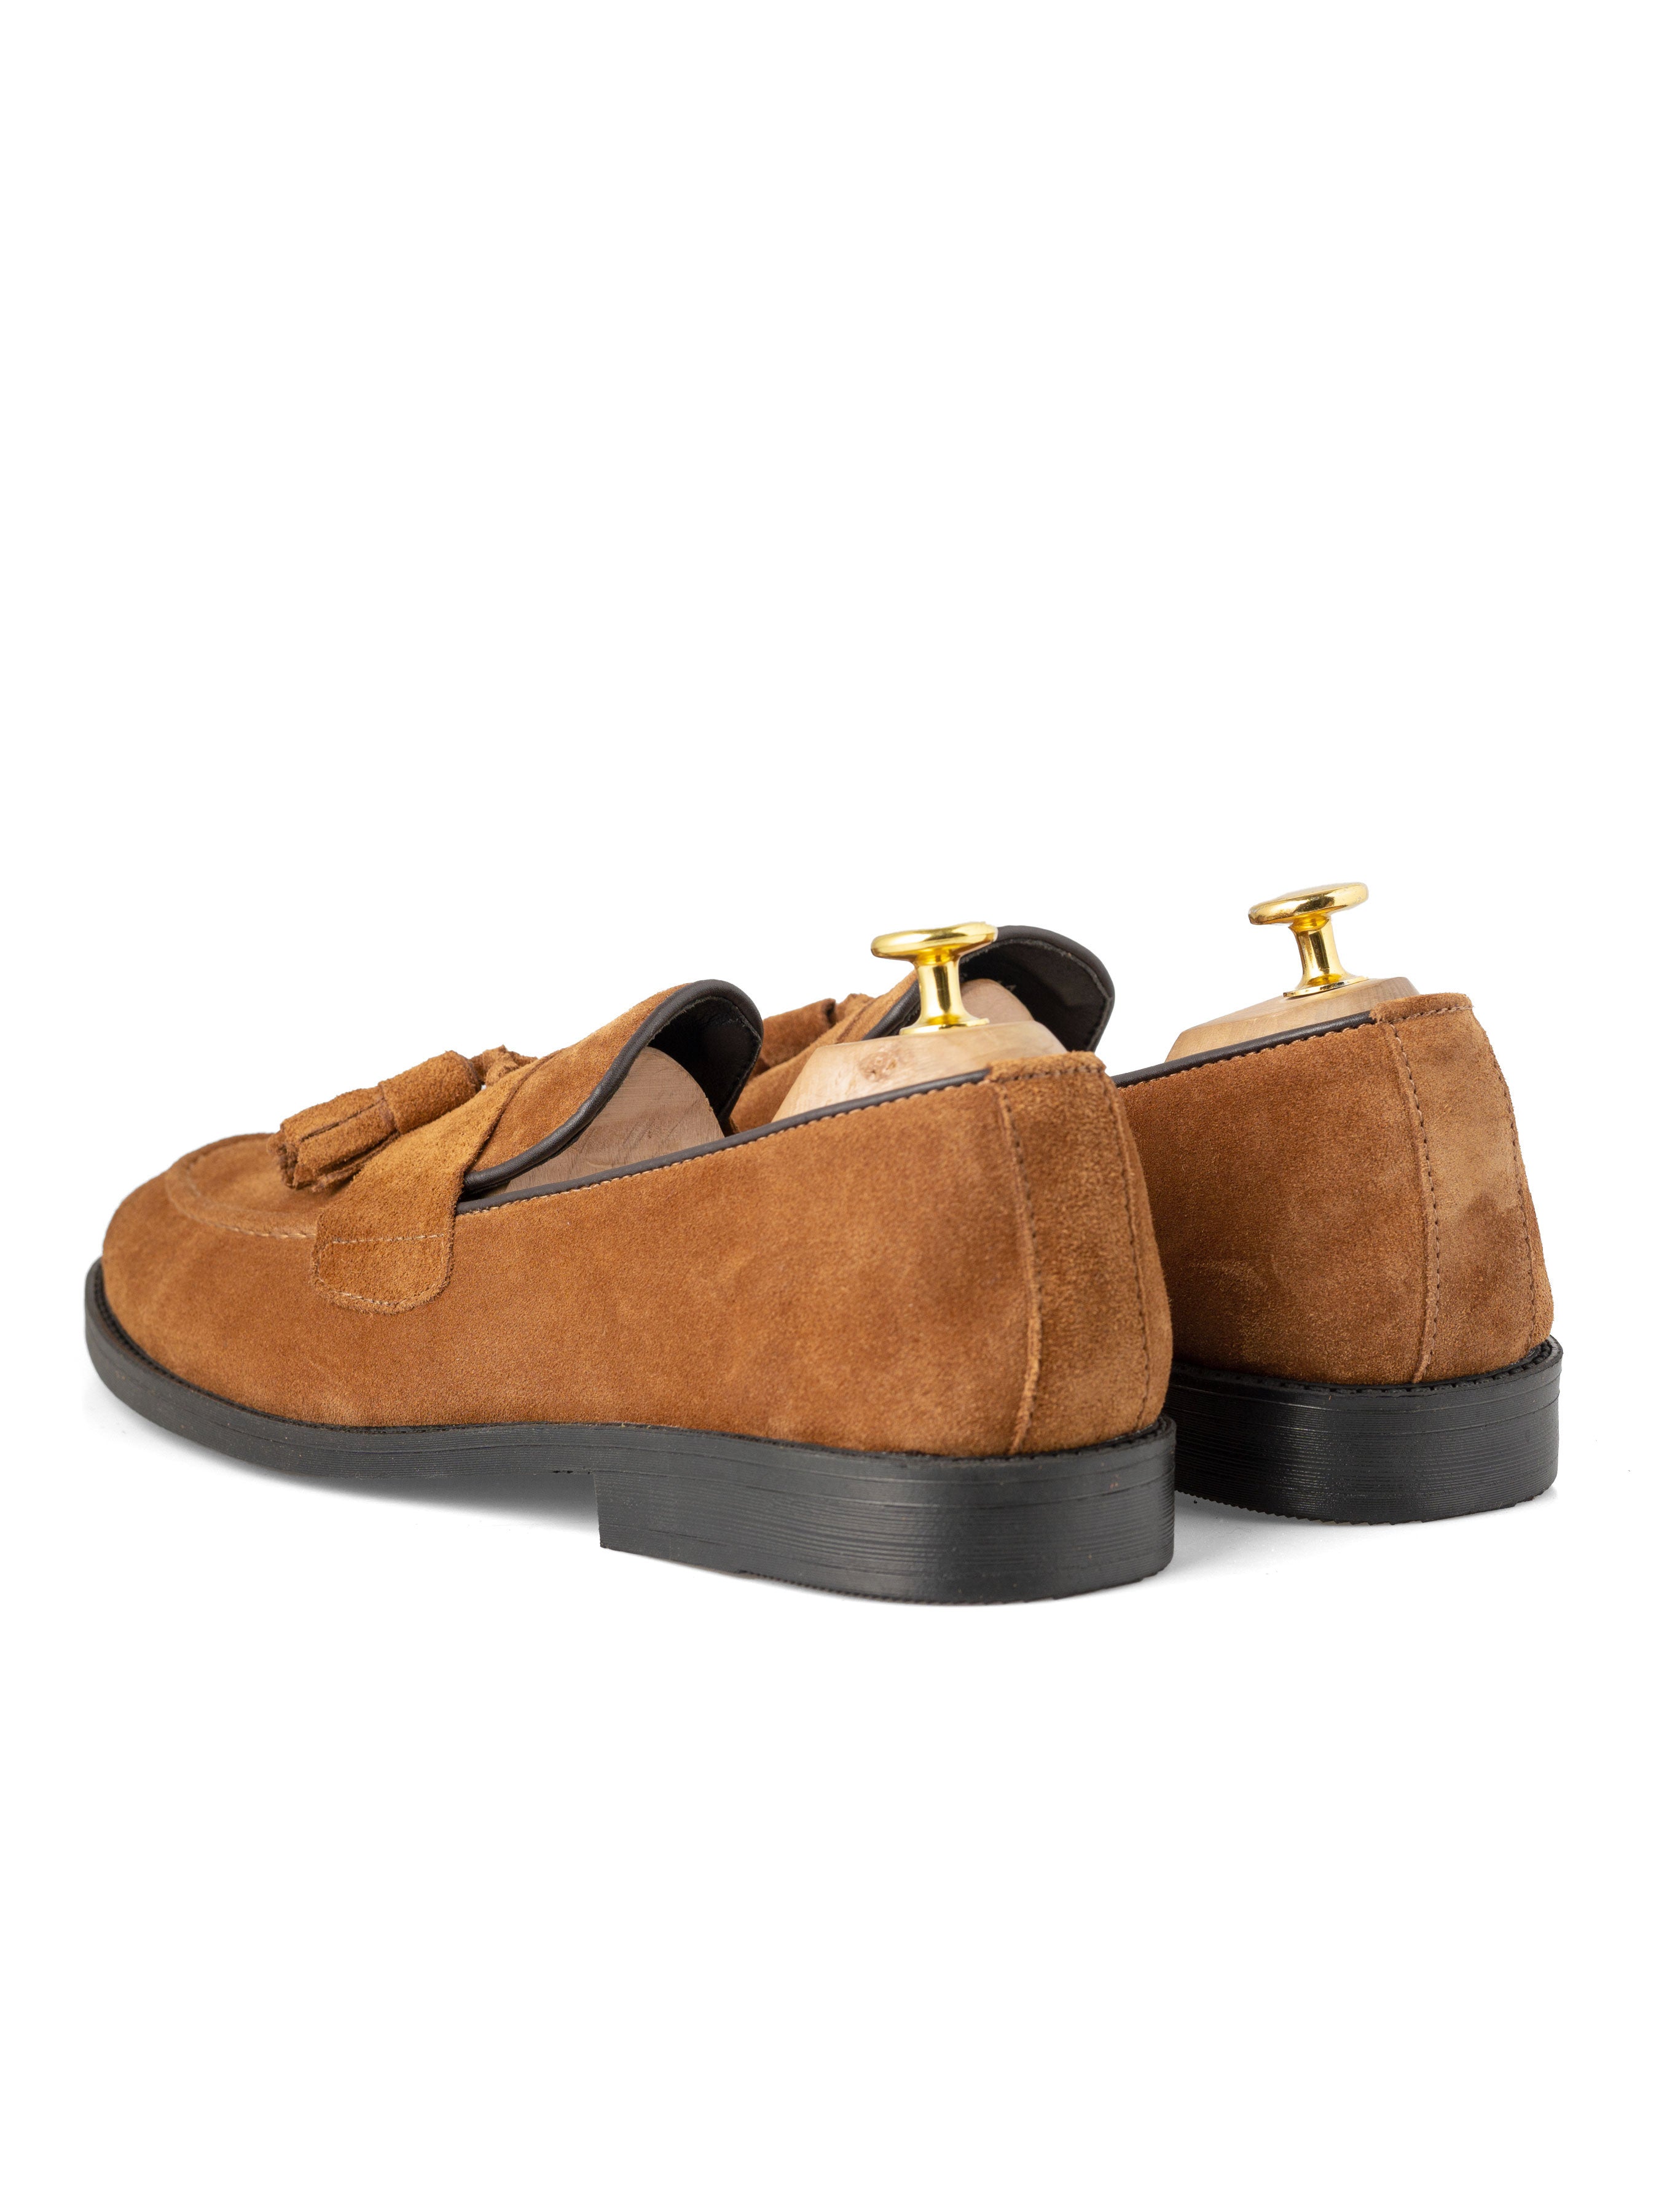 Rocky Tassel Loafer - Camel Suede Leather (Flexi-Sole) - Zeve Shoes